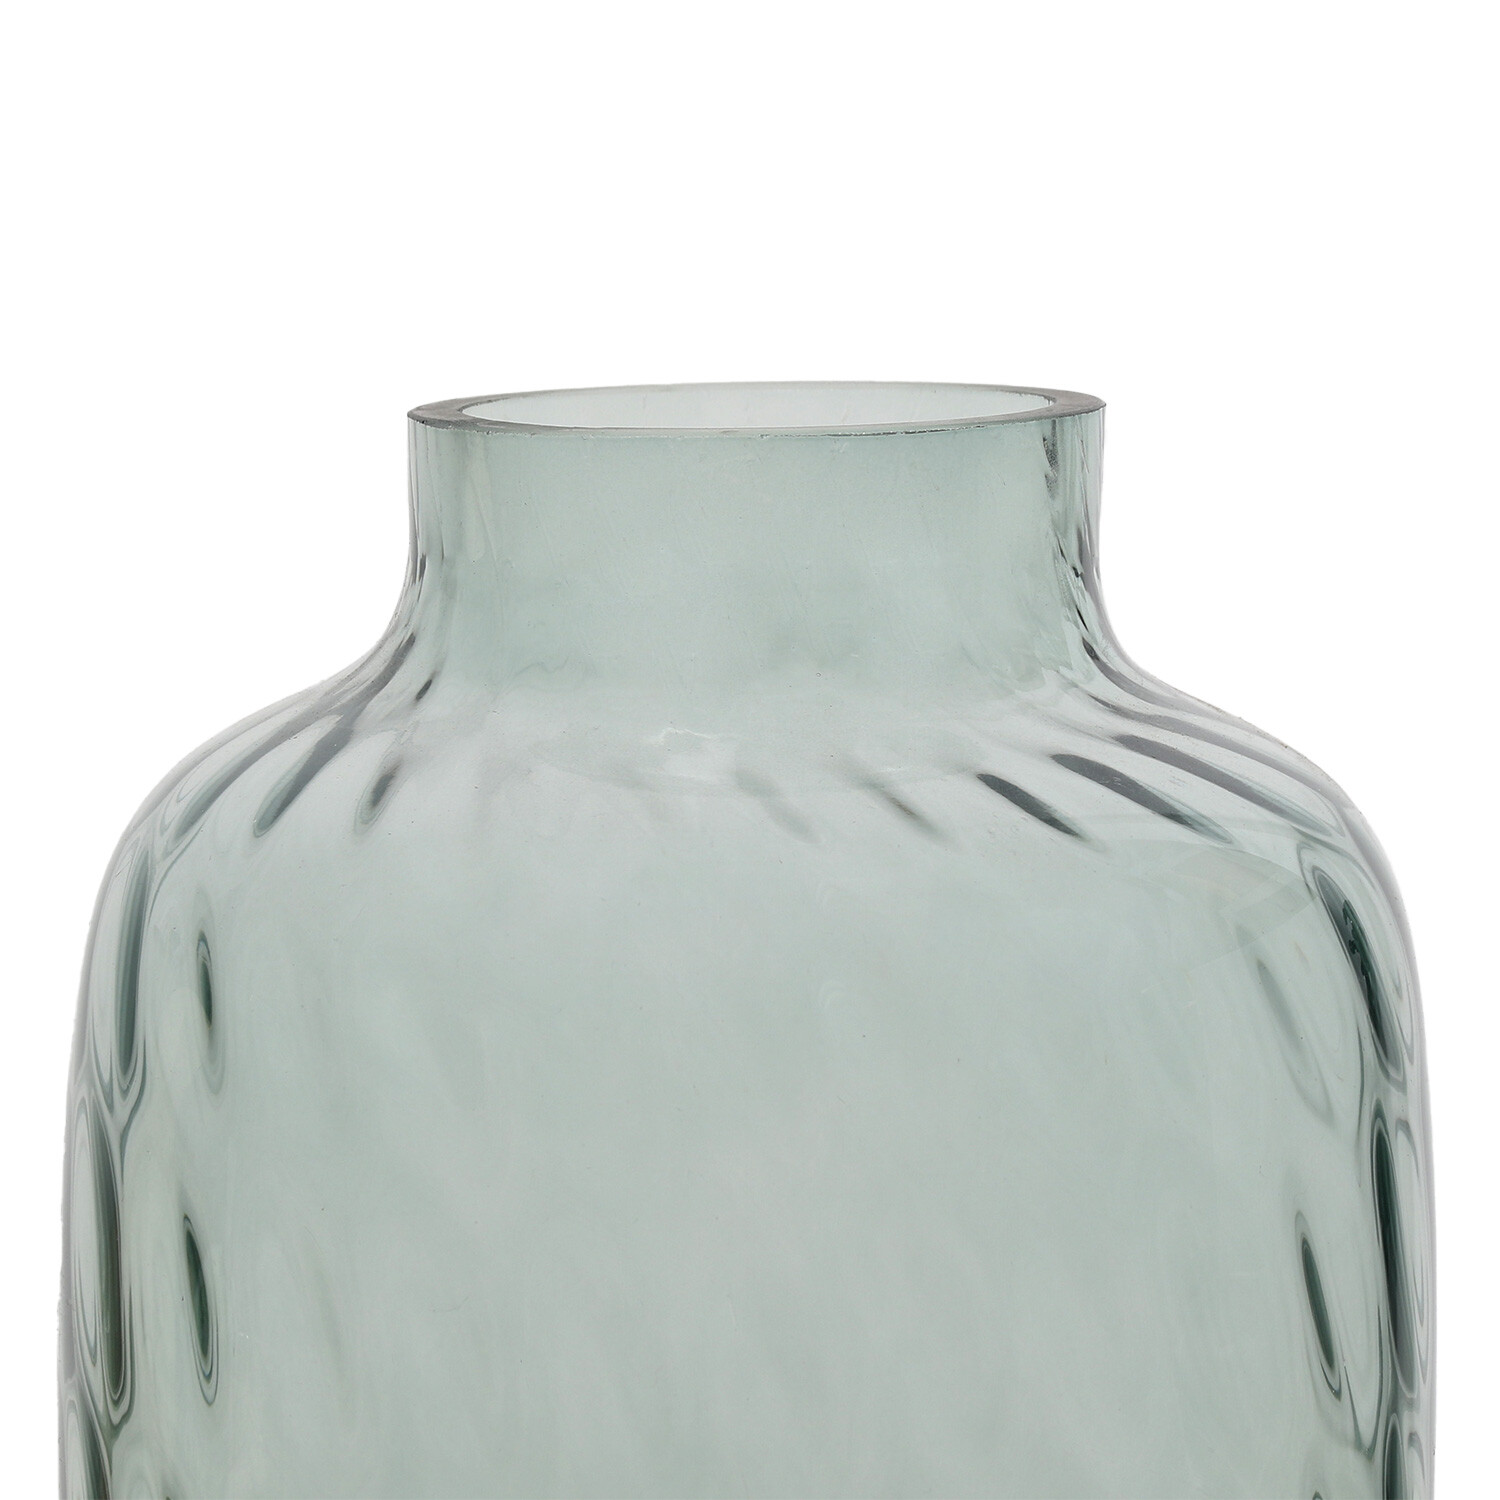 Mira Glass Vase - Ocean Green Image 4